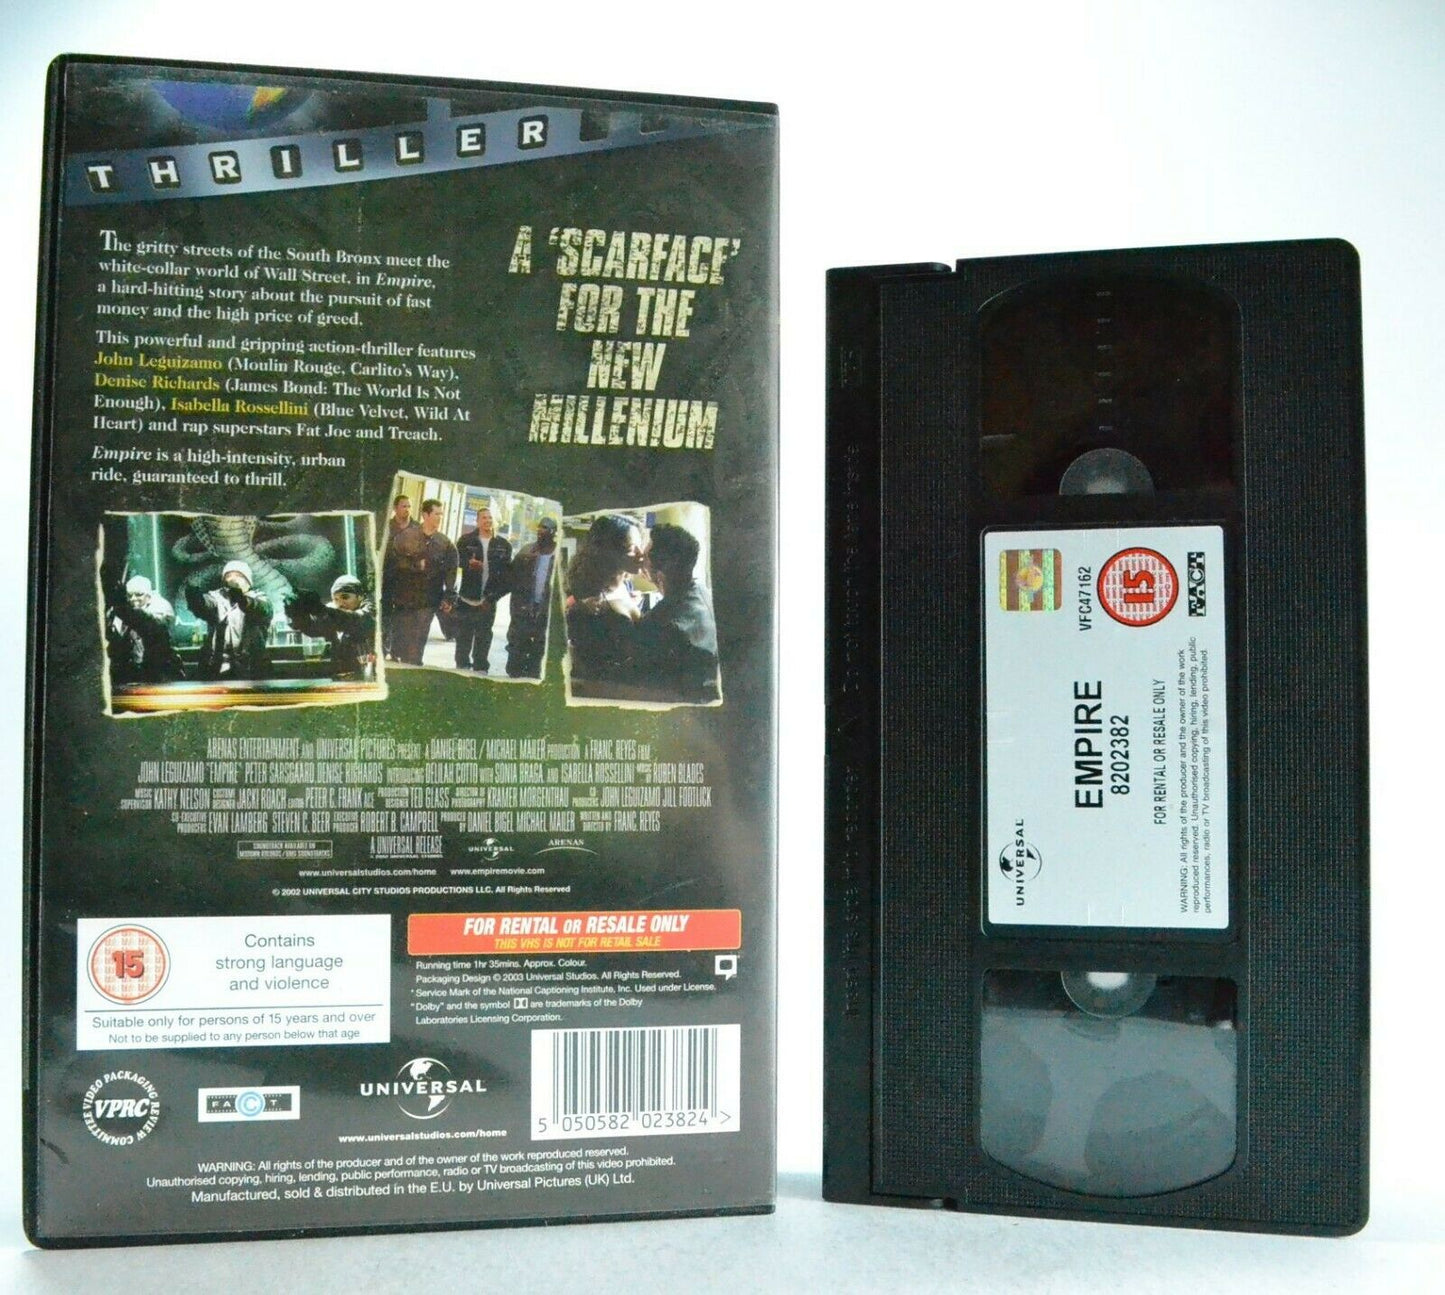 Empire: Gangster Drama (2002) - Large Box - Ex-Rental - Fat Joe / Treach - VHS-